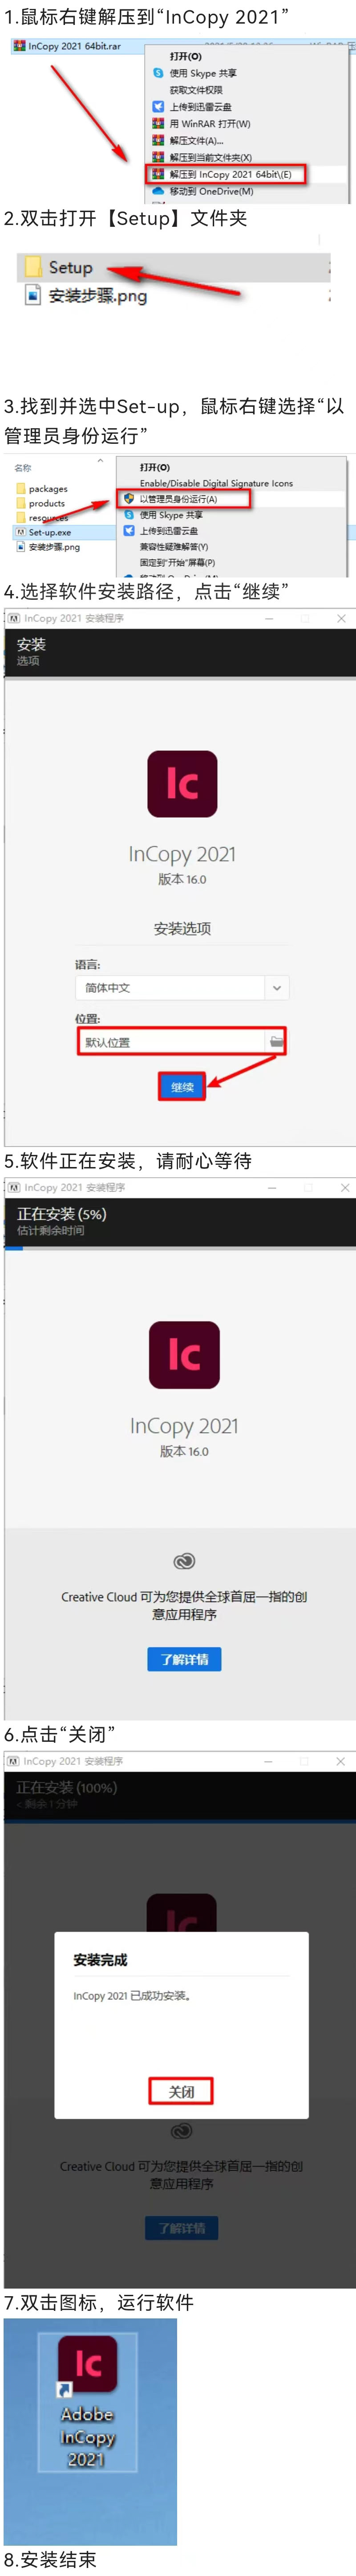 Adobe InCopy 2021װ̳.jpg